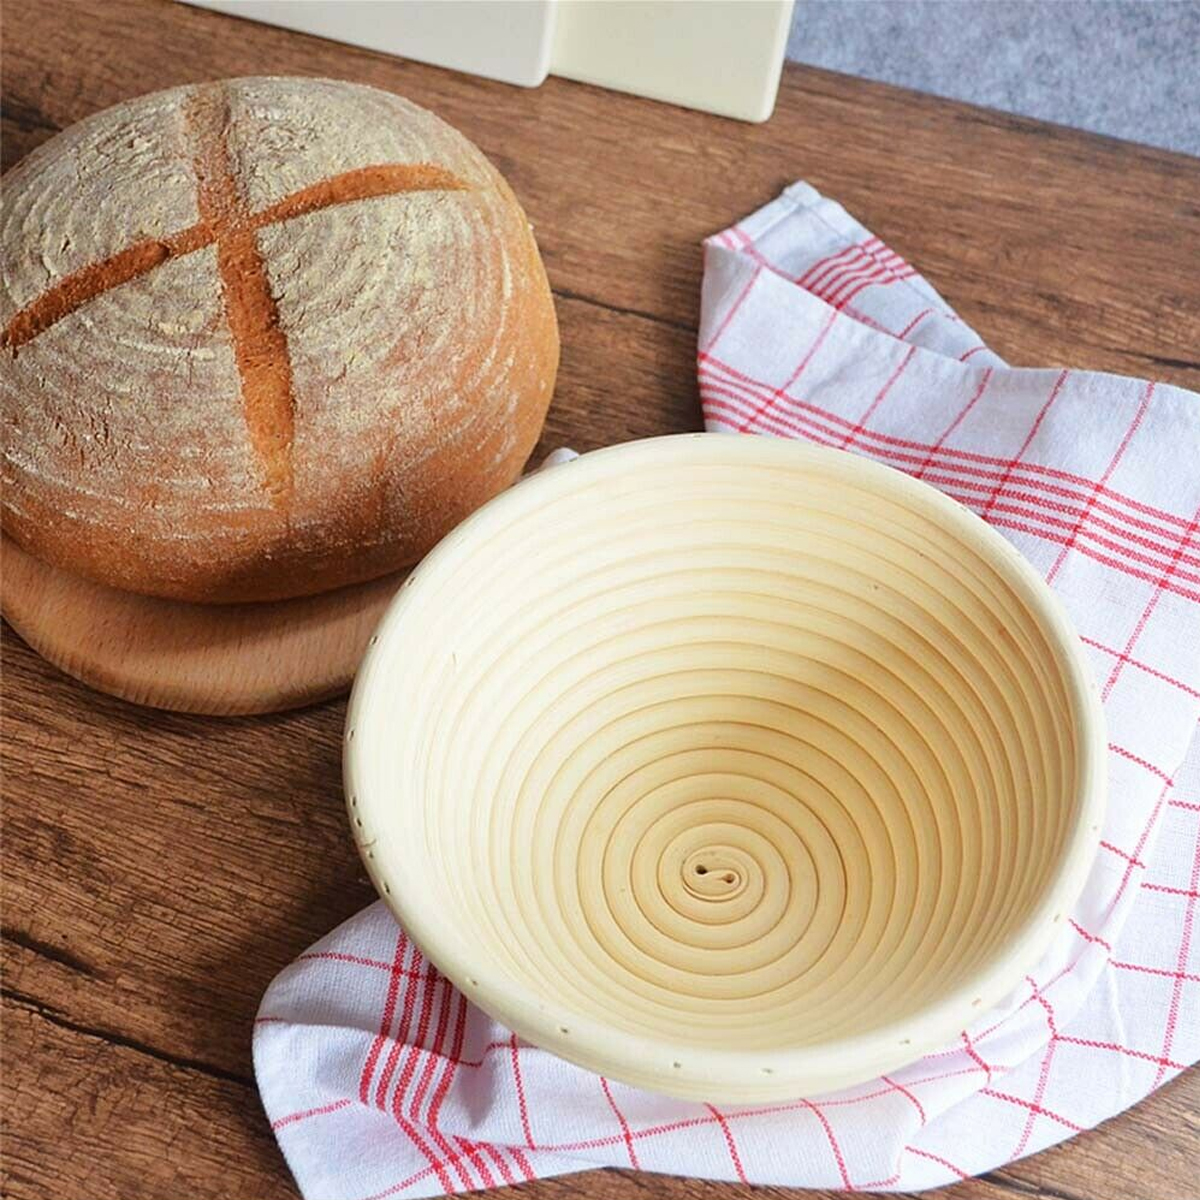 25cm-Round-Bread-Proofing-Basket-Sourdough-Proving-Banneton-Beginner-Baking-Tool-1741907-2